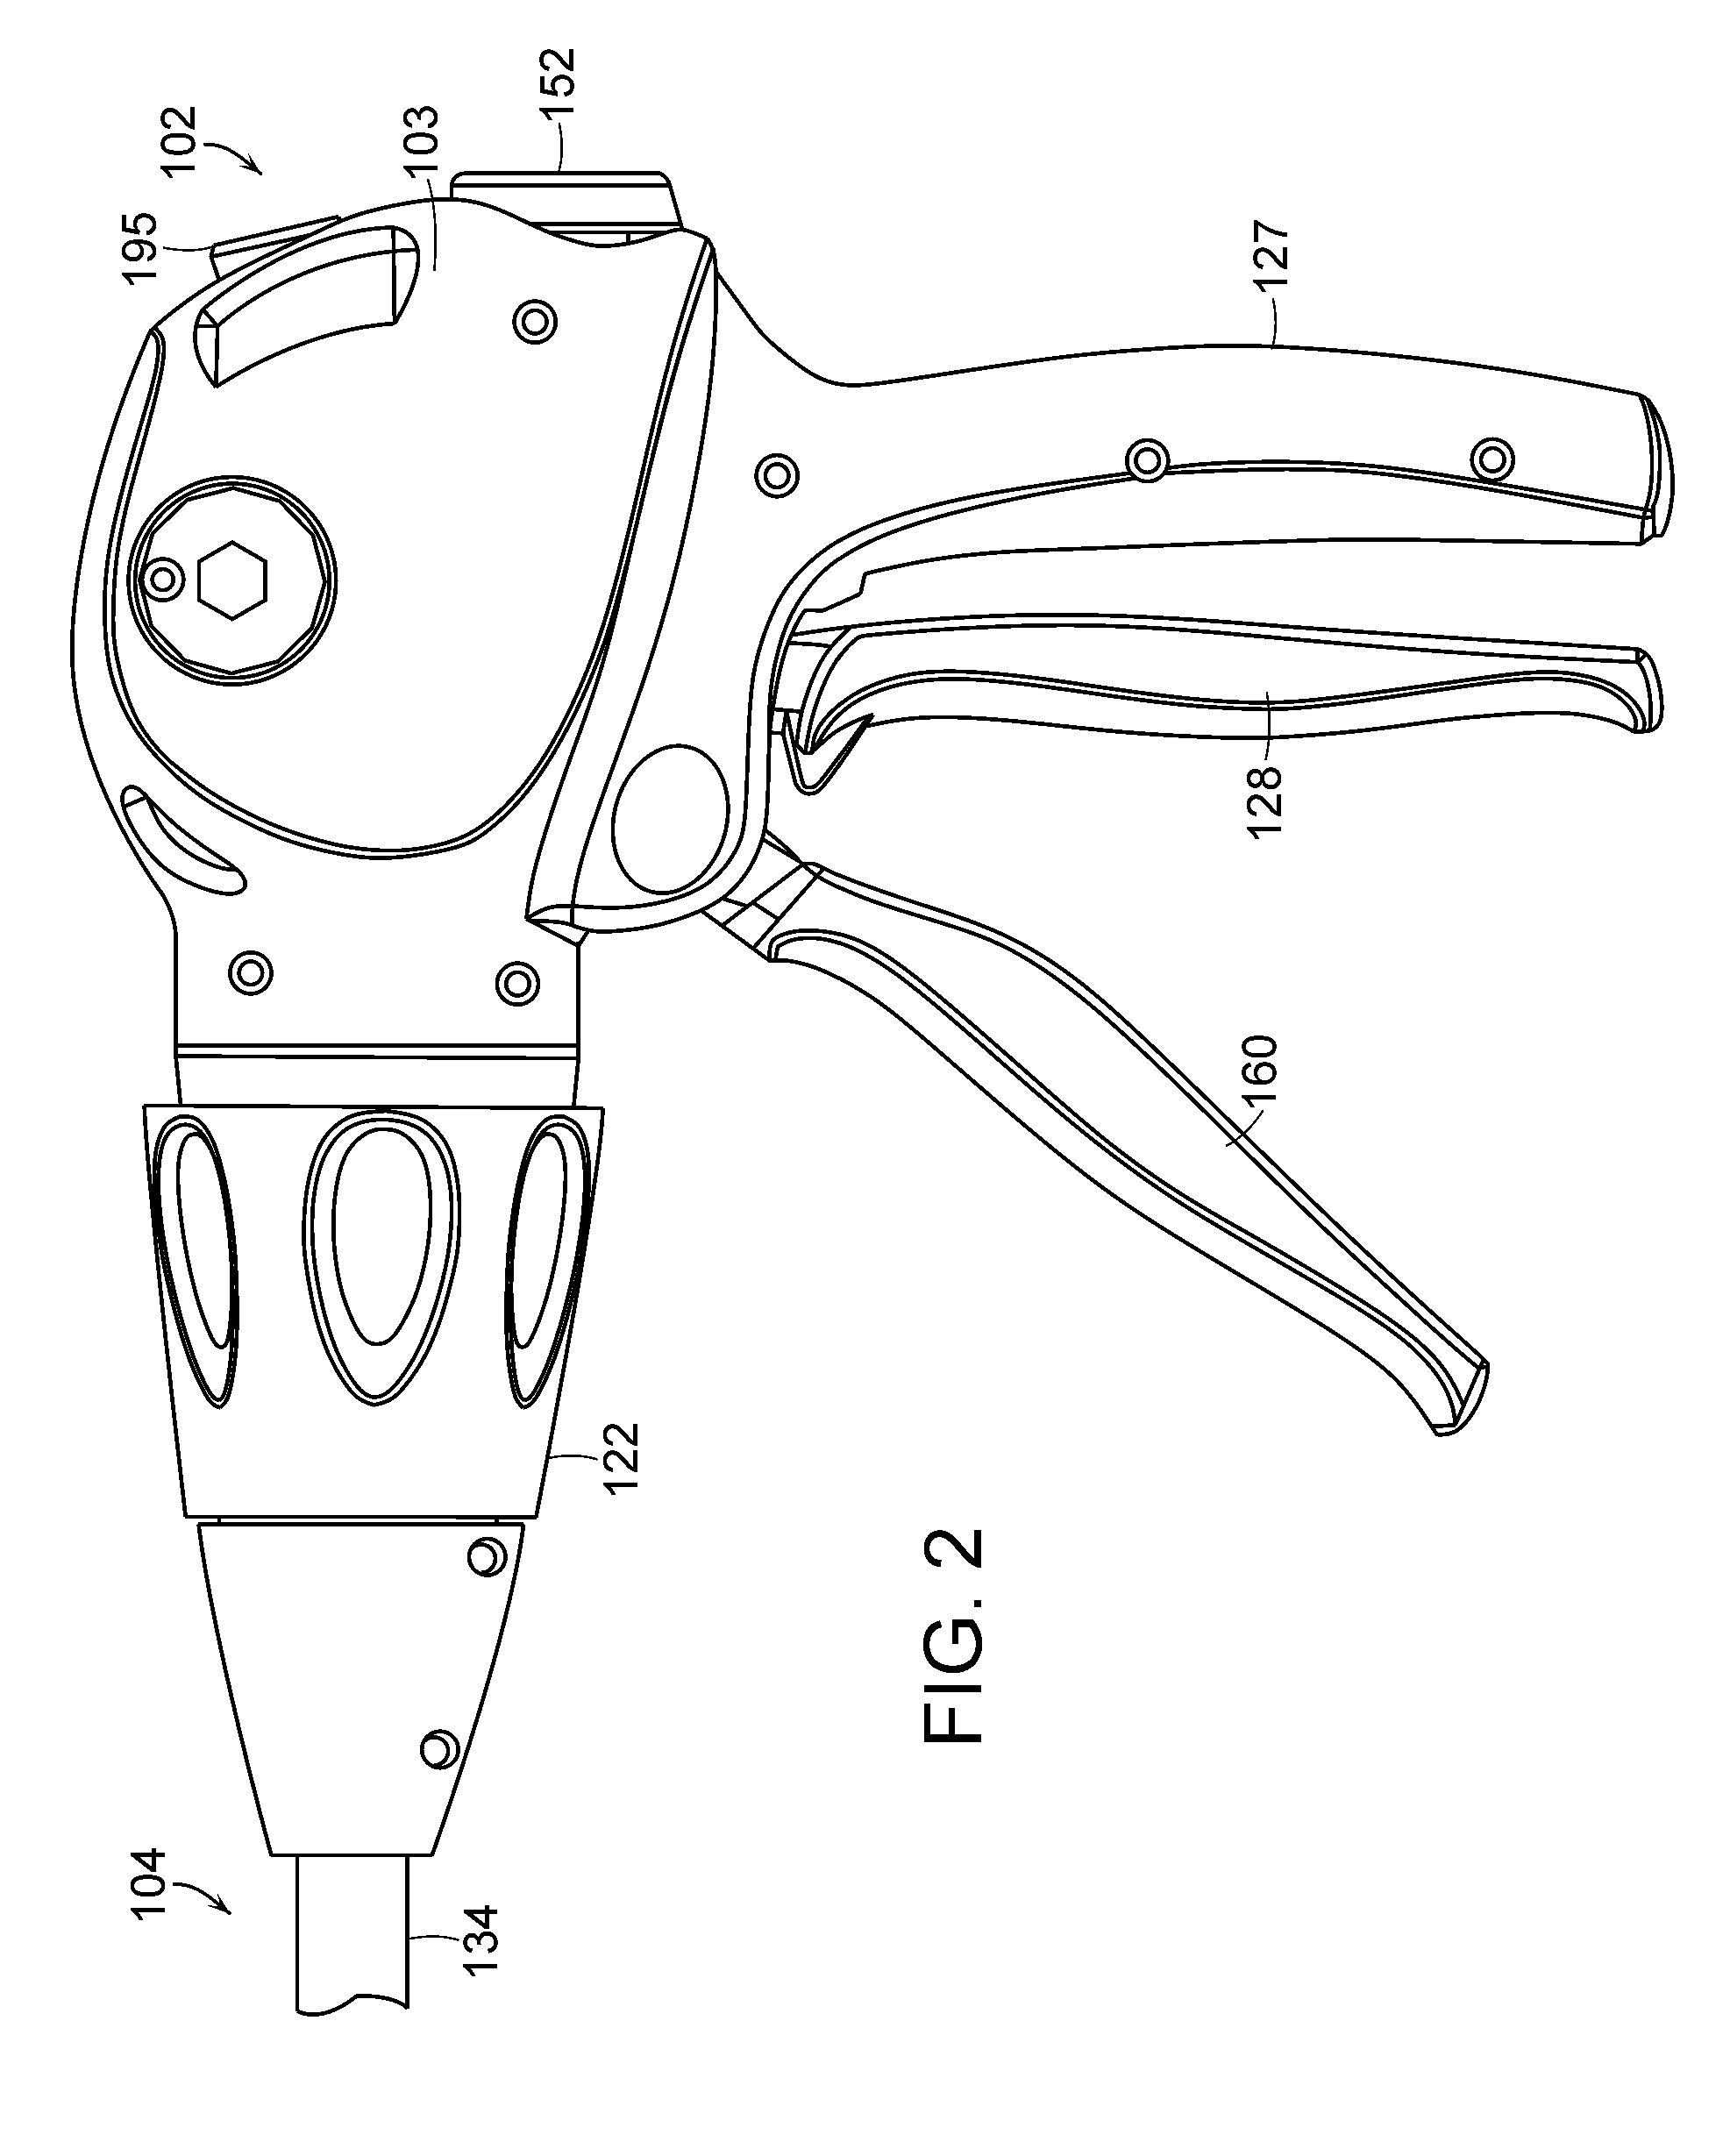 Surgical stapling instrument with a firing member return mechanism